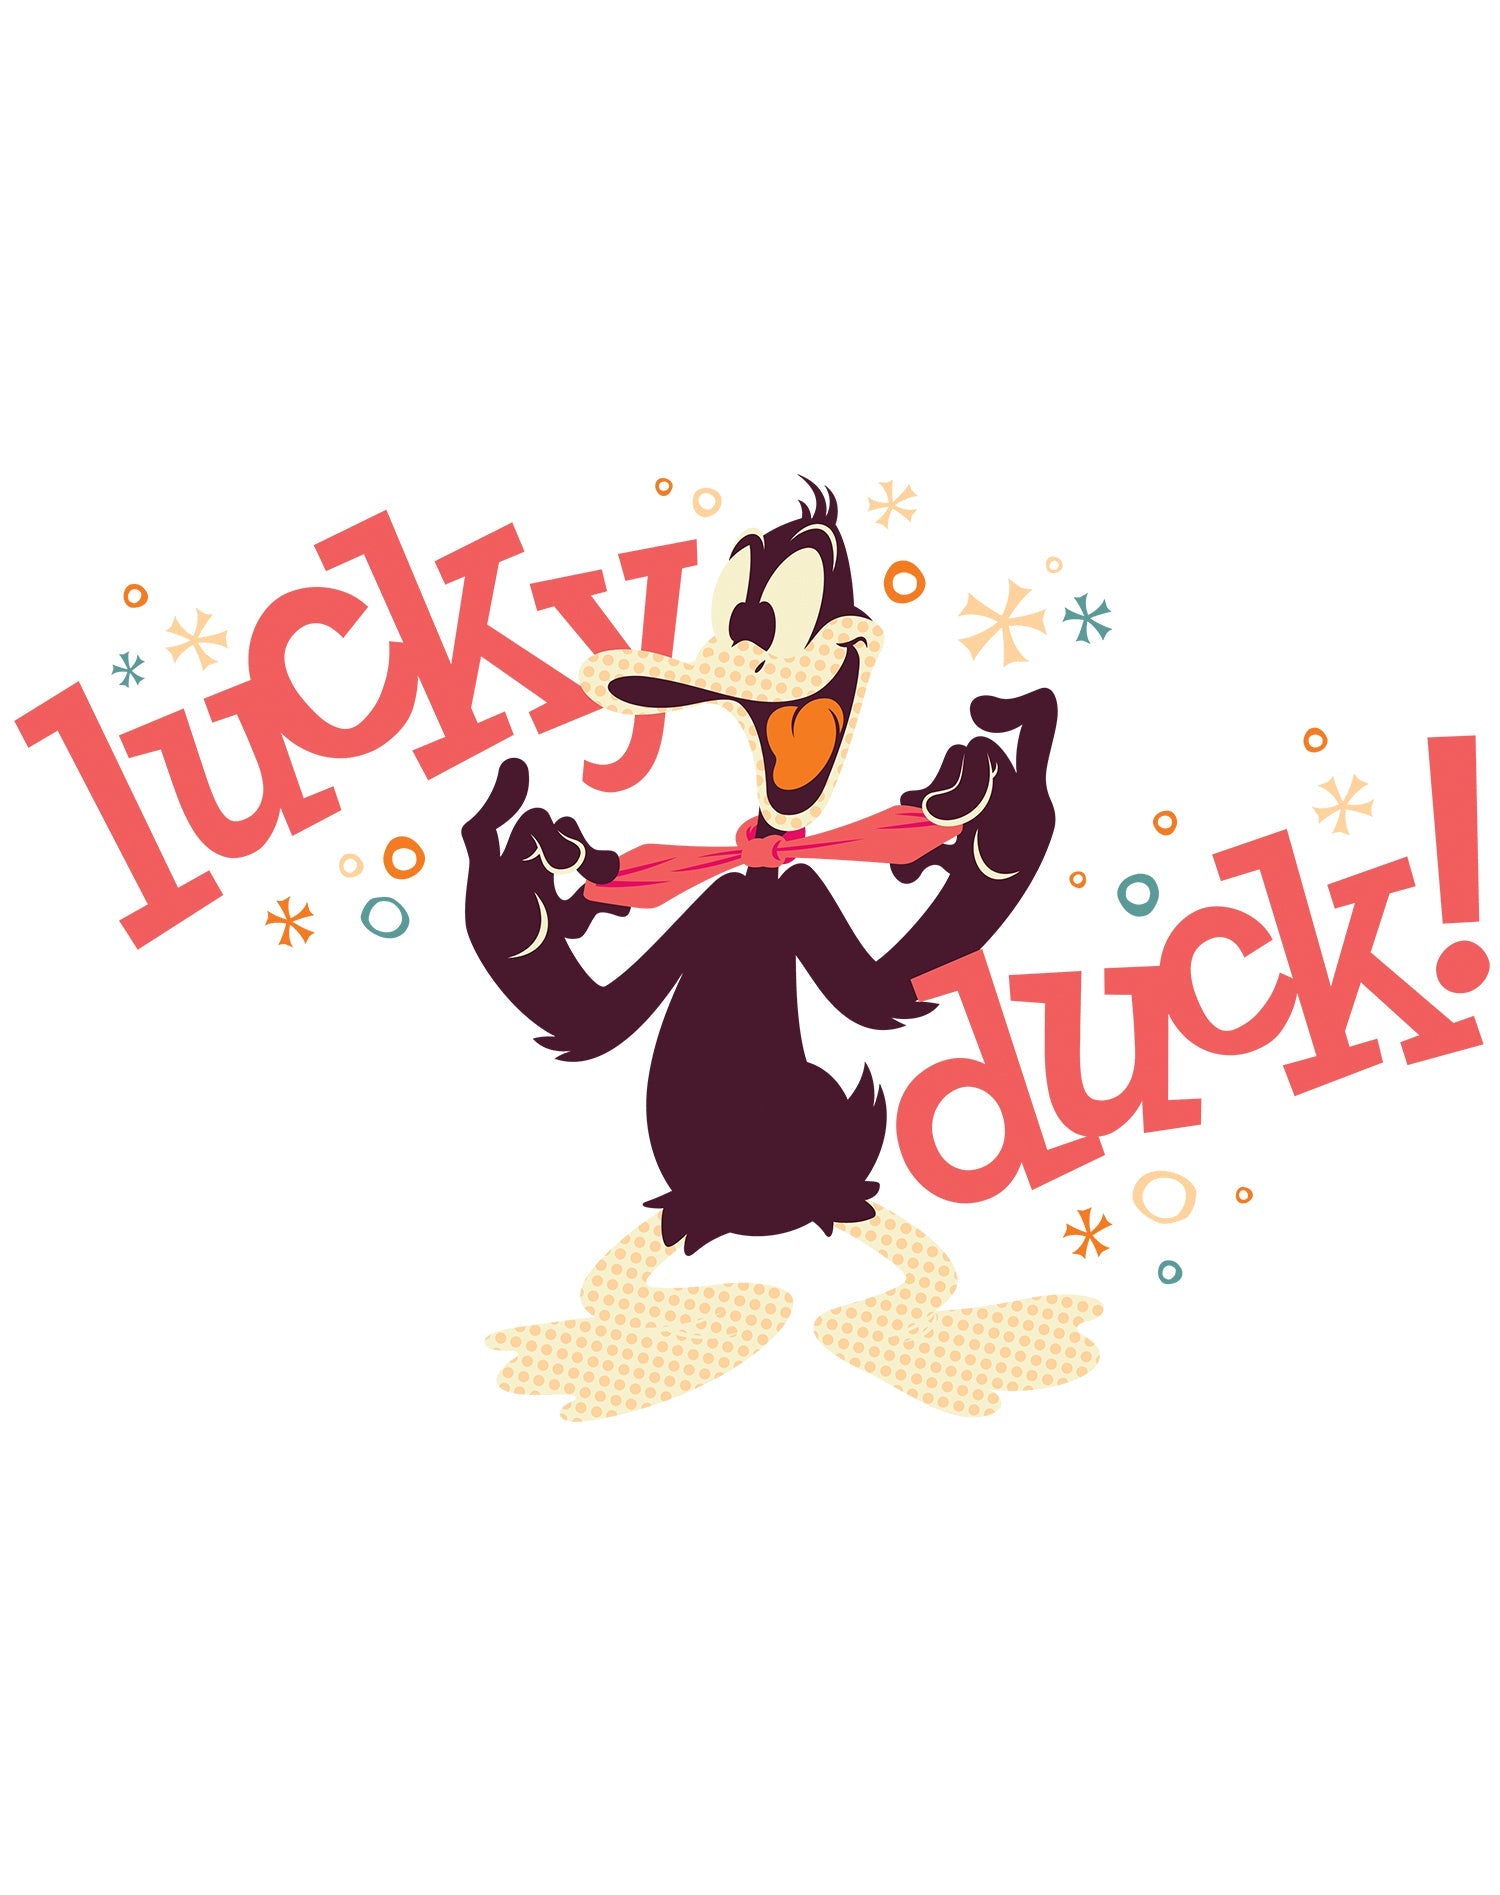 Looney Tunes Daffy Duck Retro Lucky Women's T-shirt